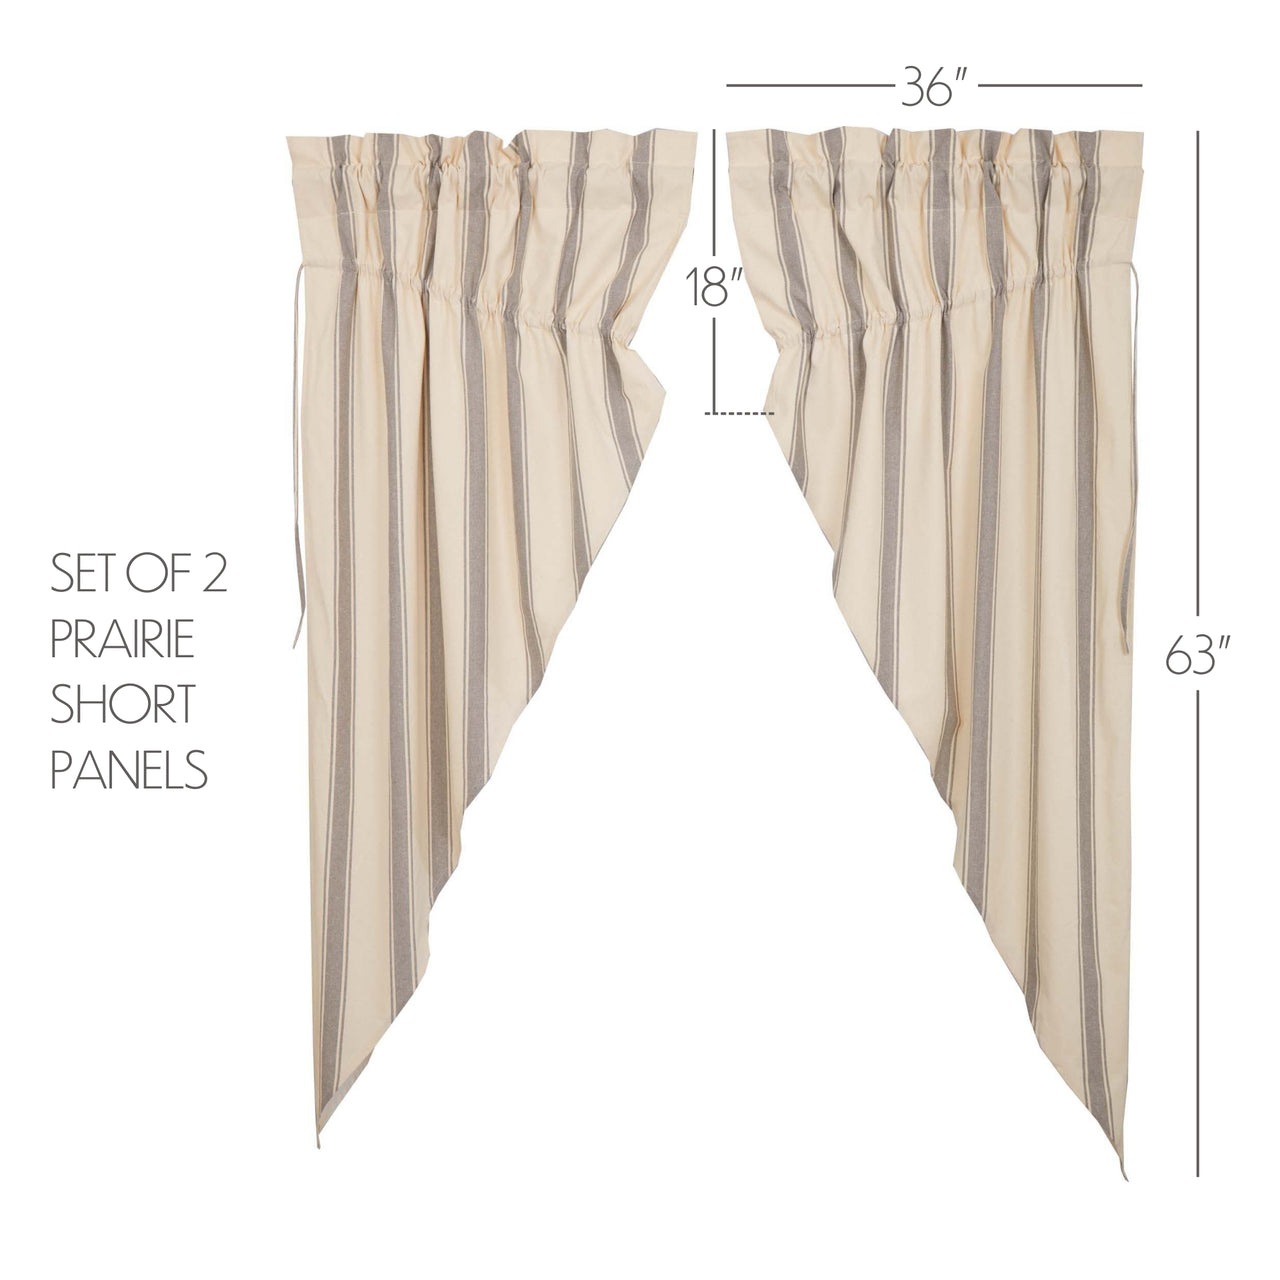 Grace Grain Sack Stripe Prairie Short Panel Set of 2 63x36x18 VHC Brands